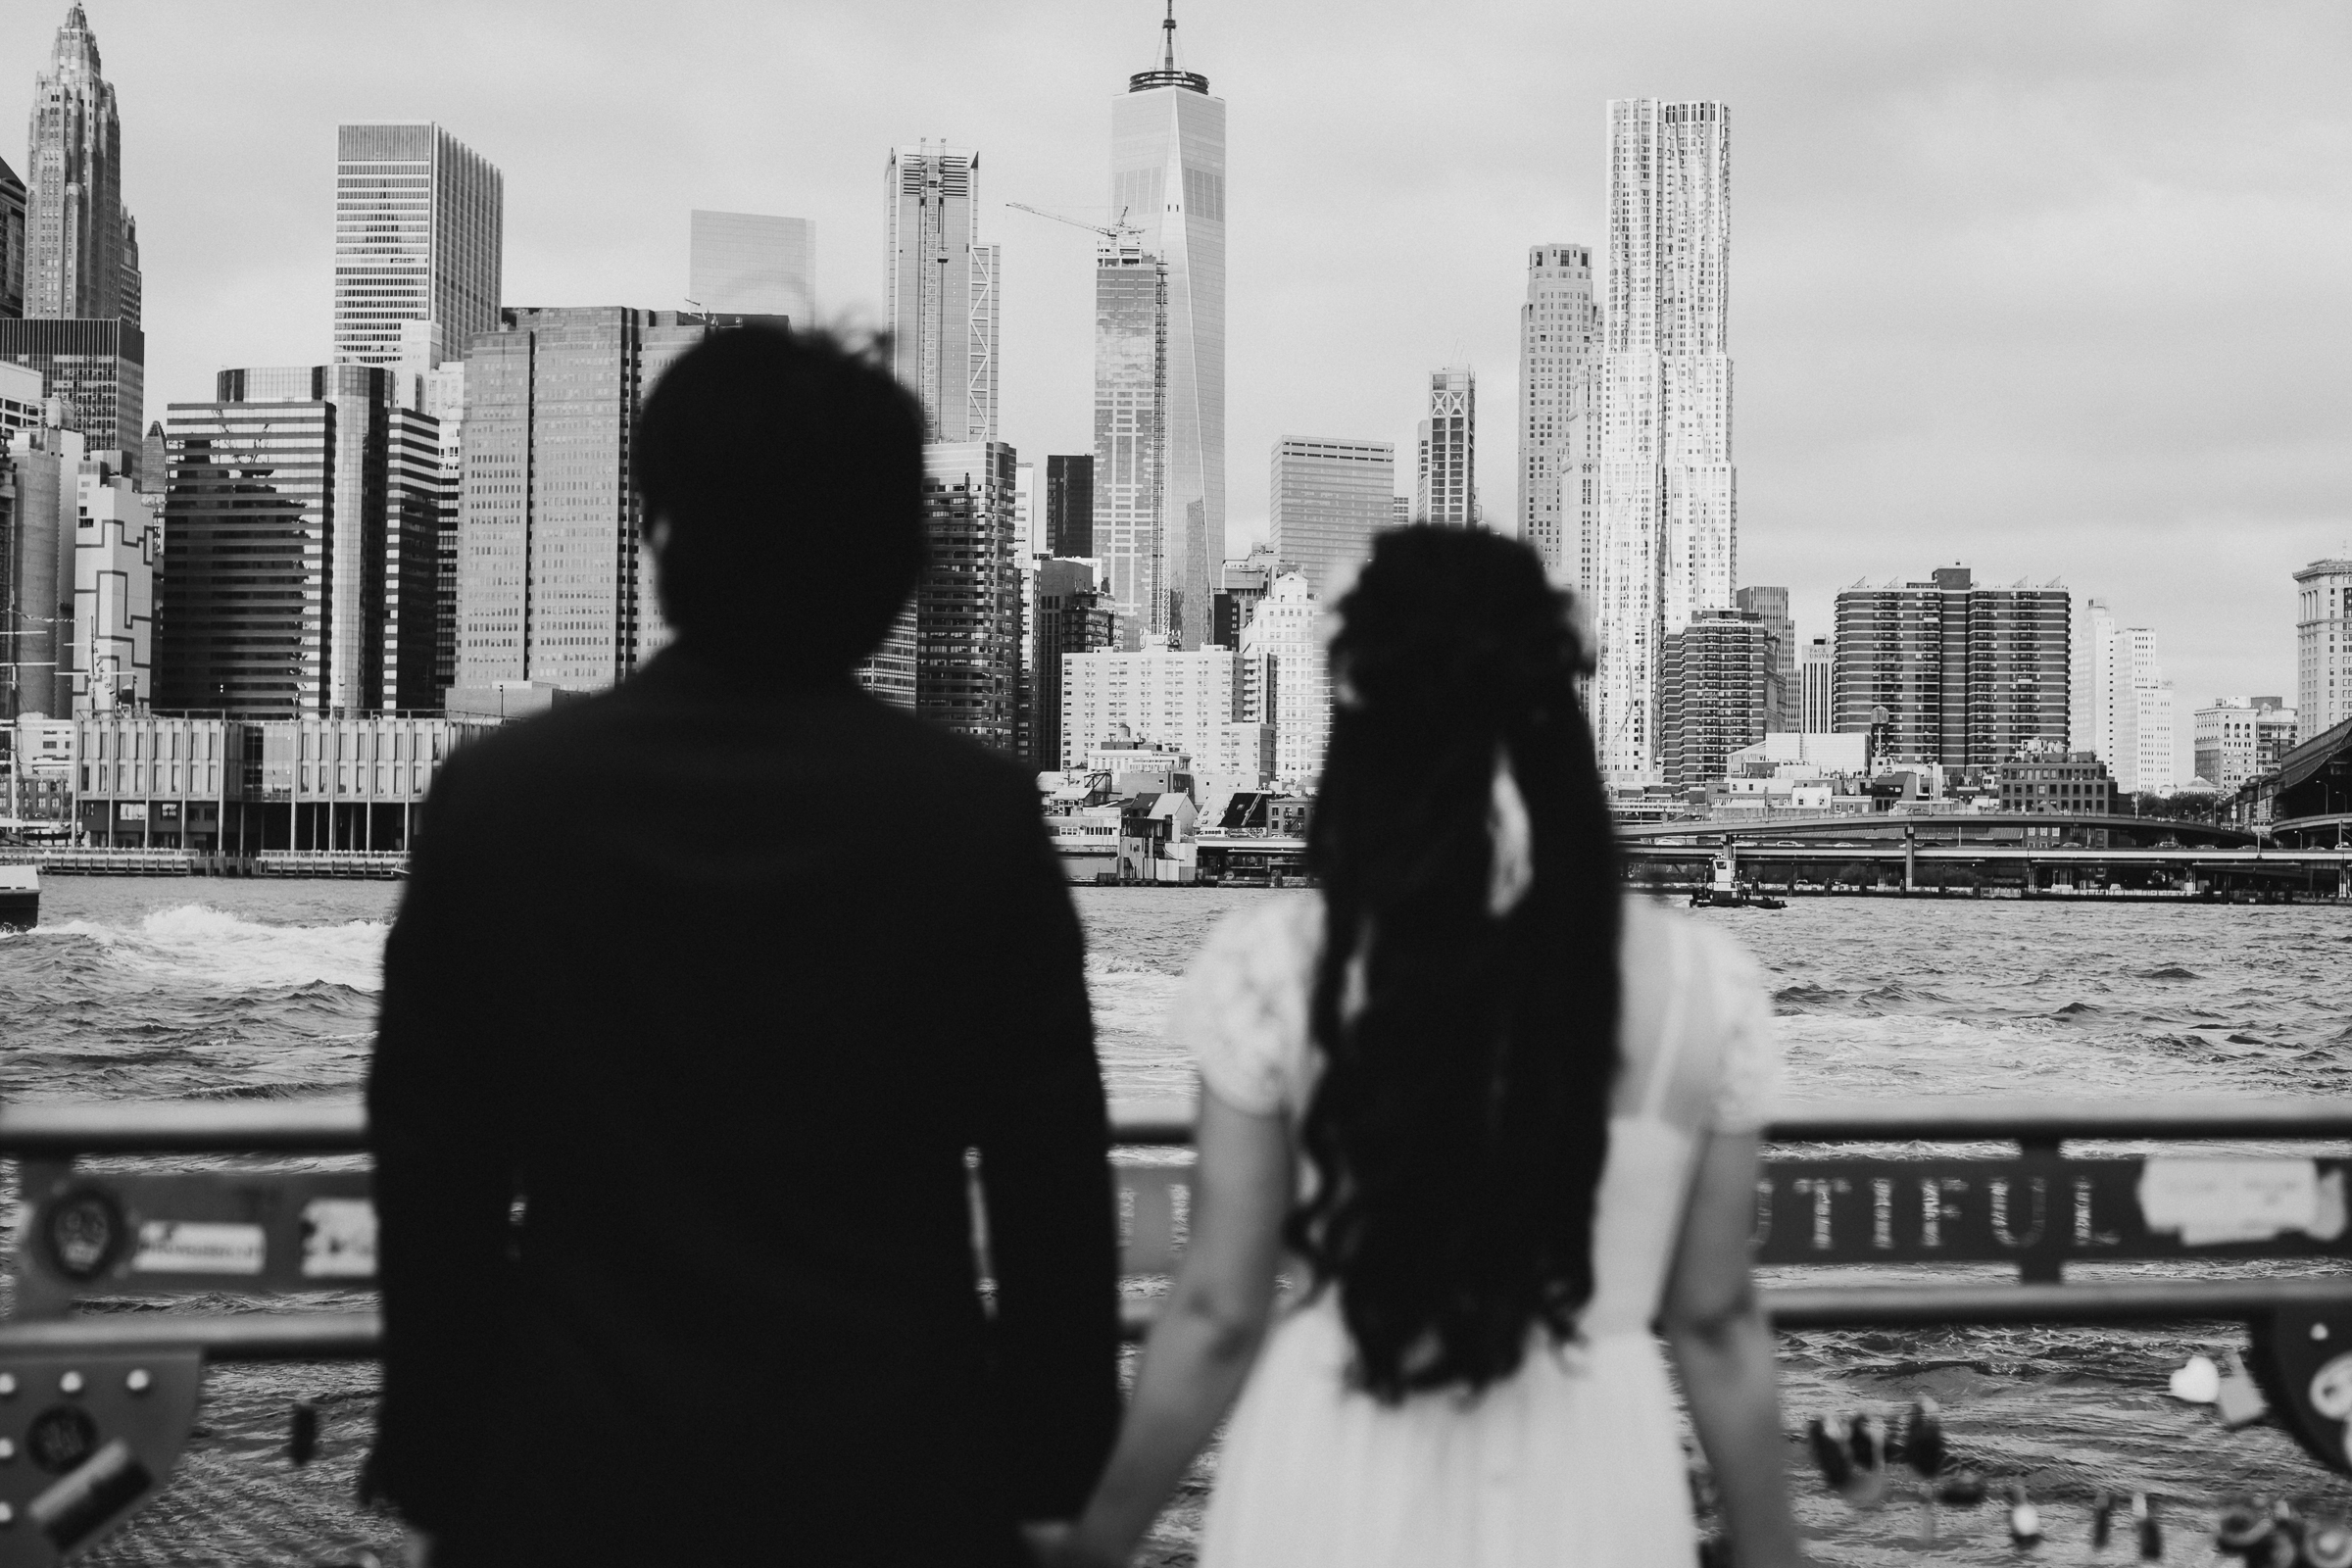 Central-Park-Brooklyn-Bridge-Dumbo-NYC-Documentary-Wedding-Photographer-21.jpg